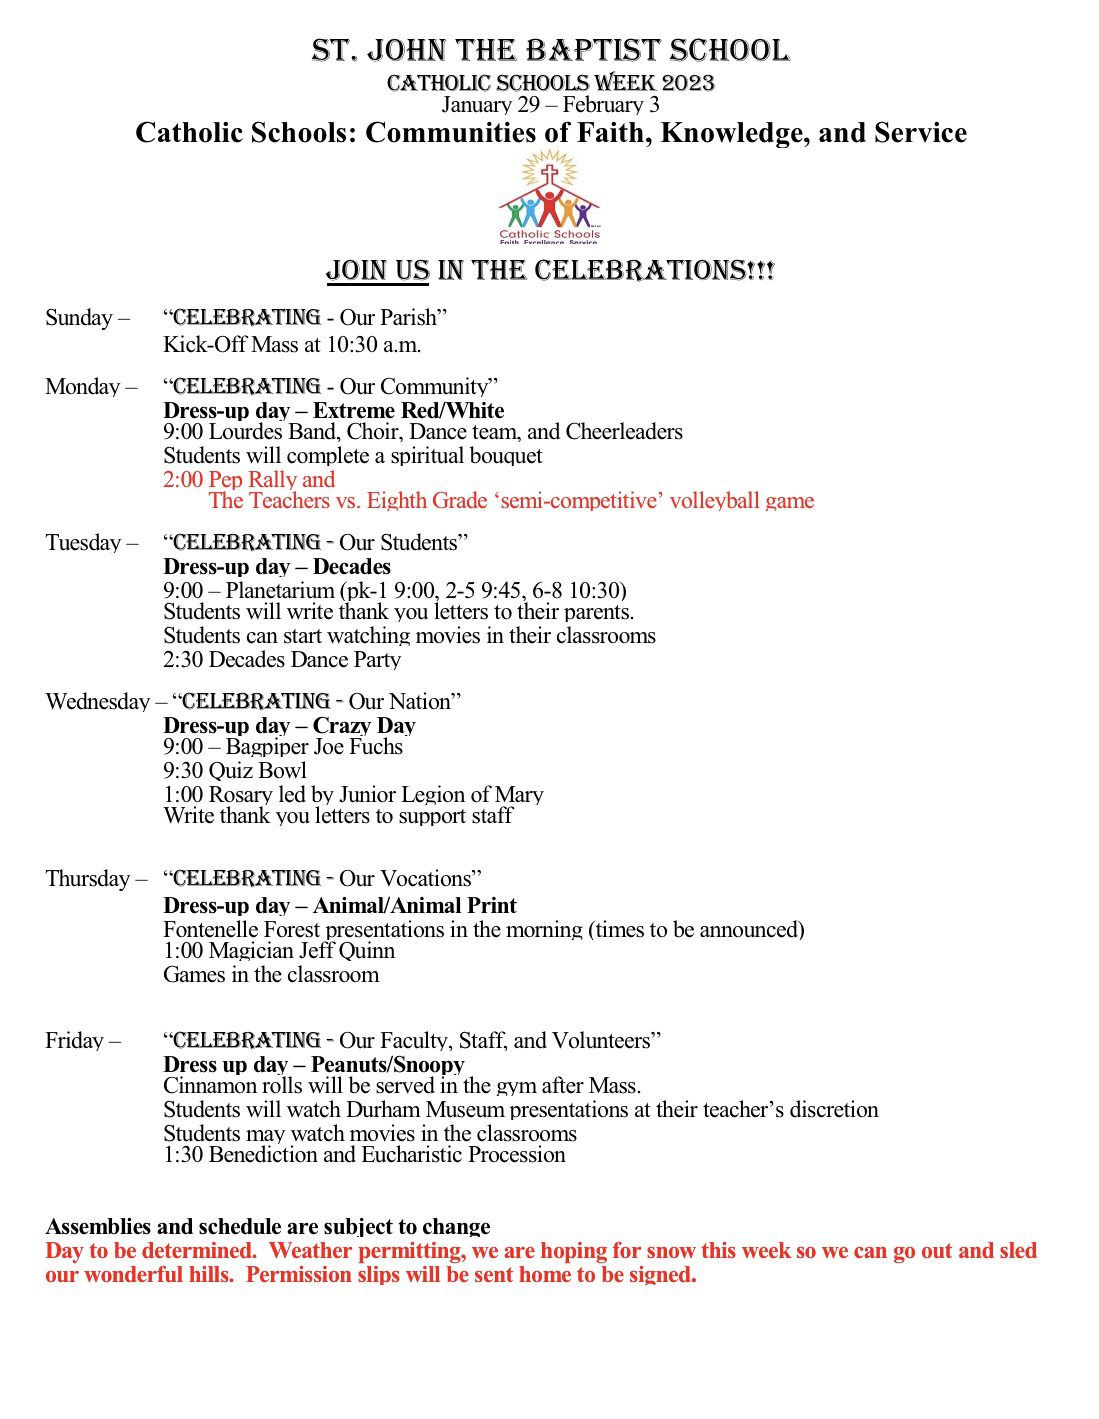 Catholic Schools Week Schedule Set | St. John the Baptist Catholic School